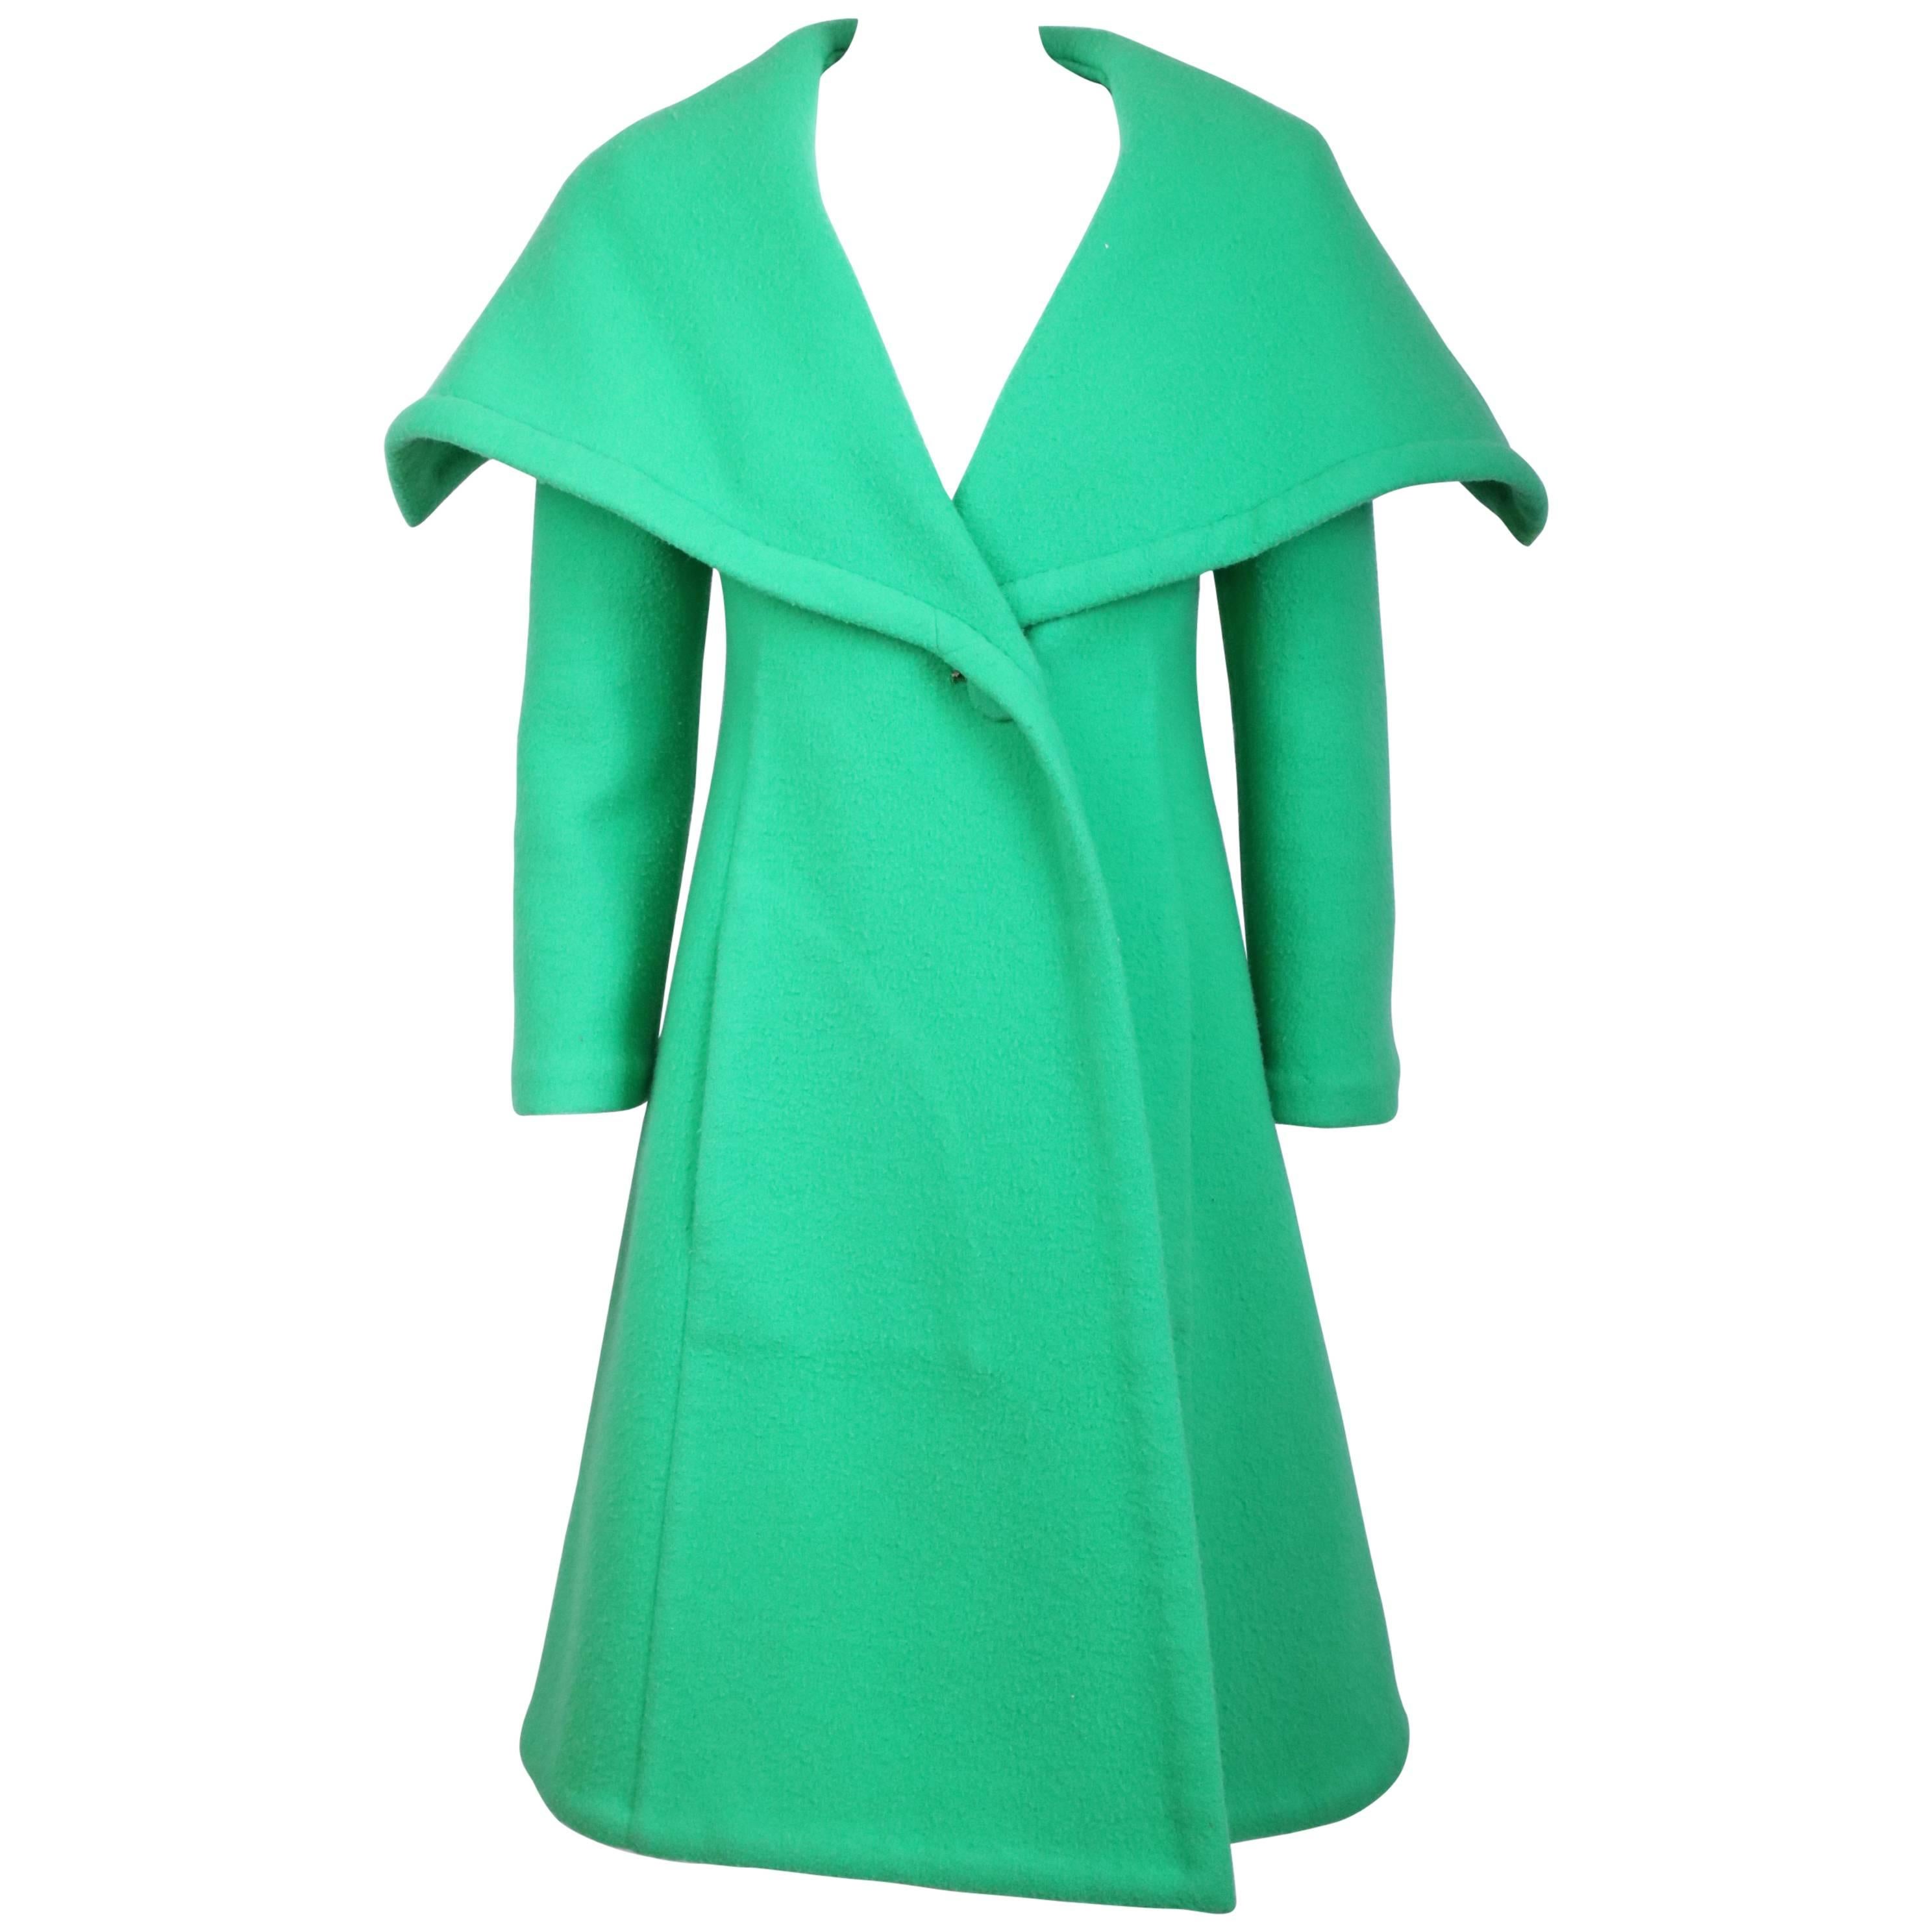 Pauline Trigere for Bonwit Teller Kelly Green Wool Coat w/Oversized Collar